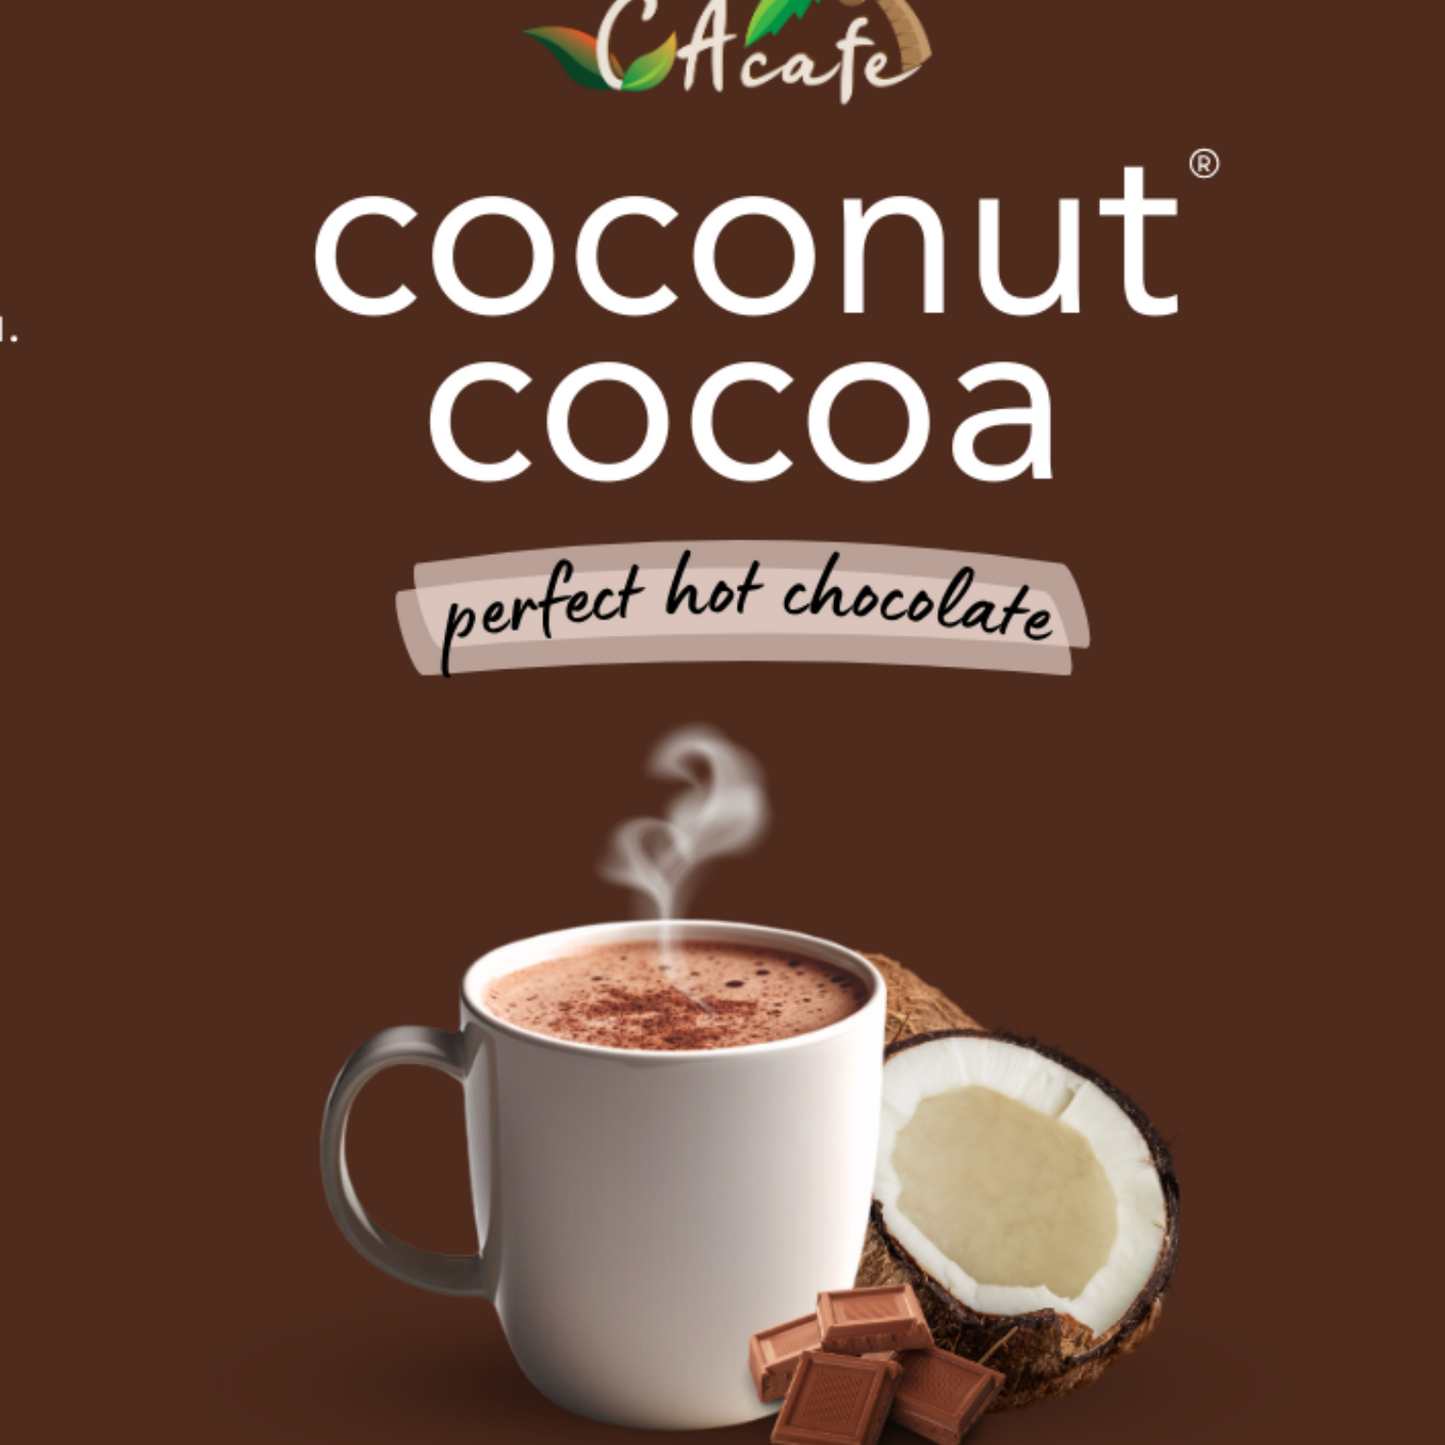 Coconut Cocoa - perfect hot chocolate